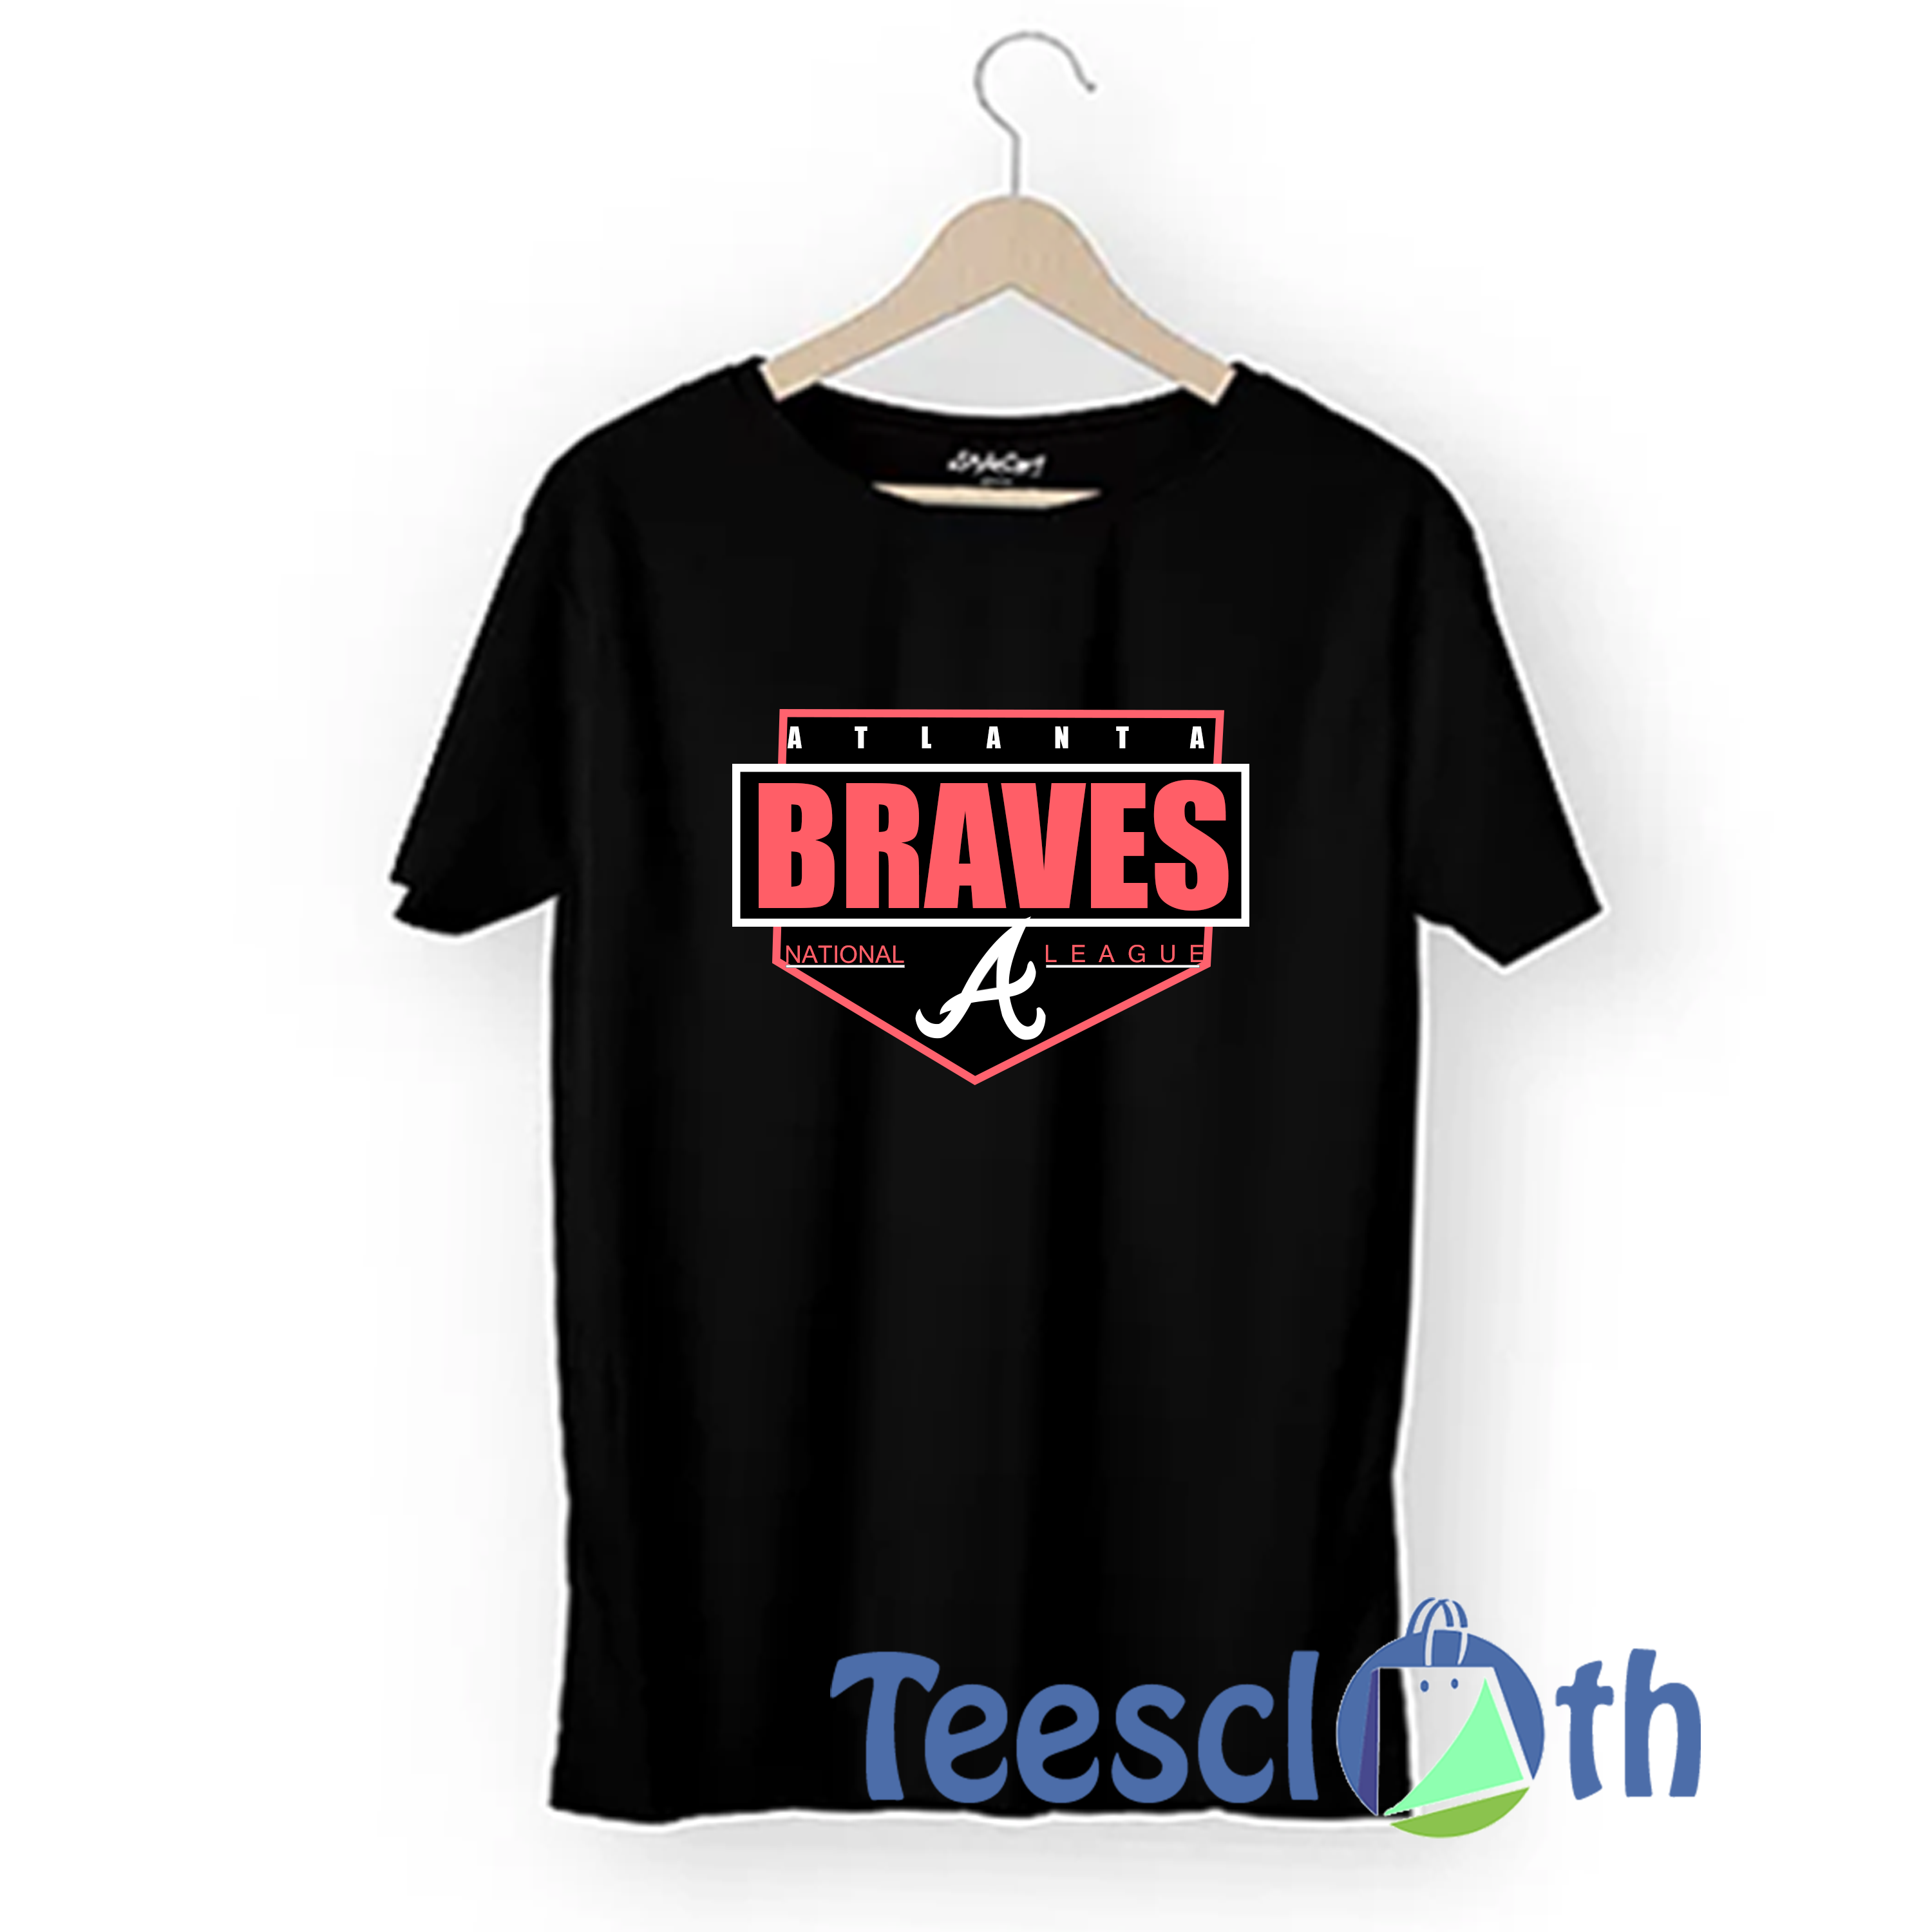 the braves shirt